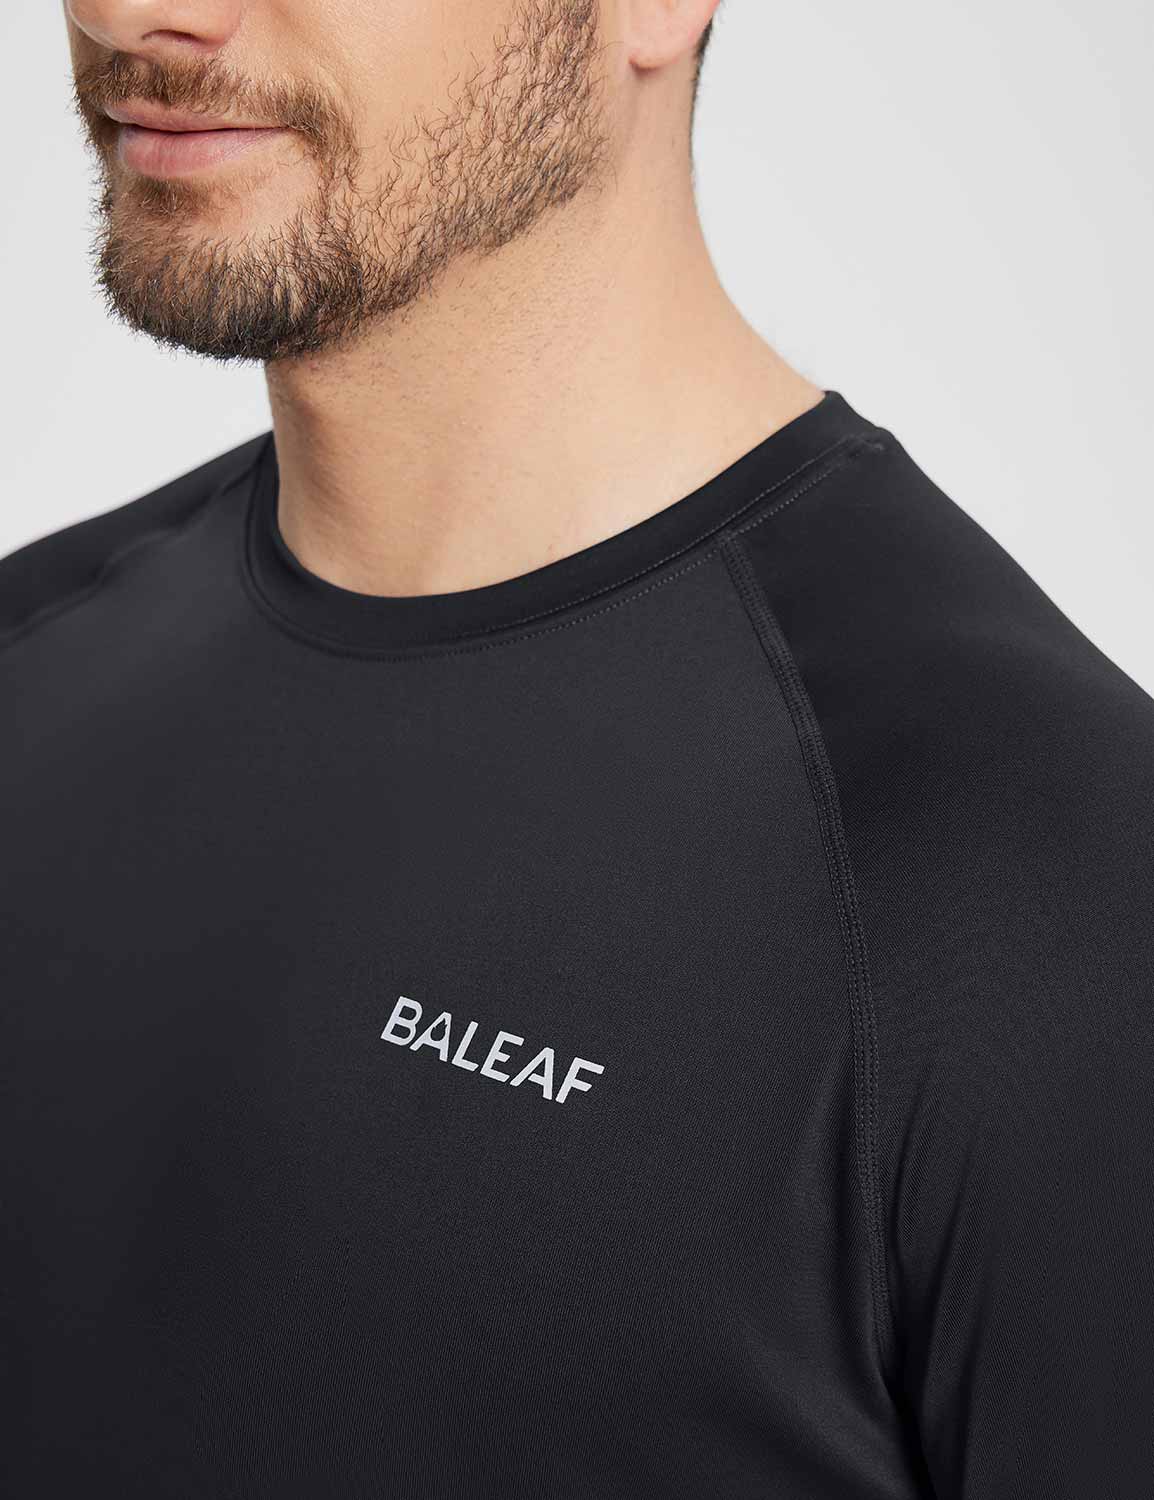 Baleaf Men's Sustainable Long-Sleeve Baselayer Anthracite Details